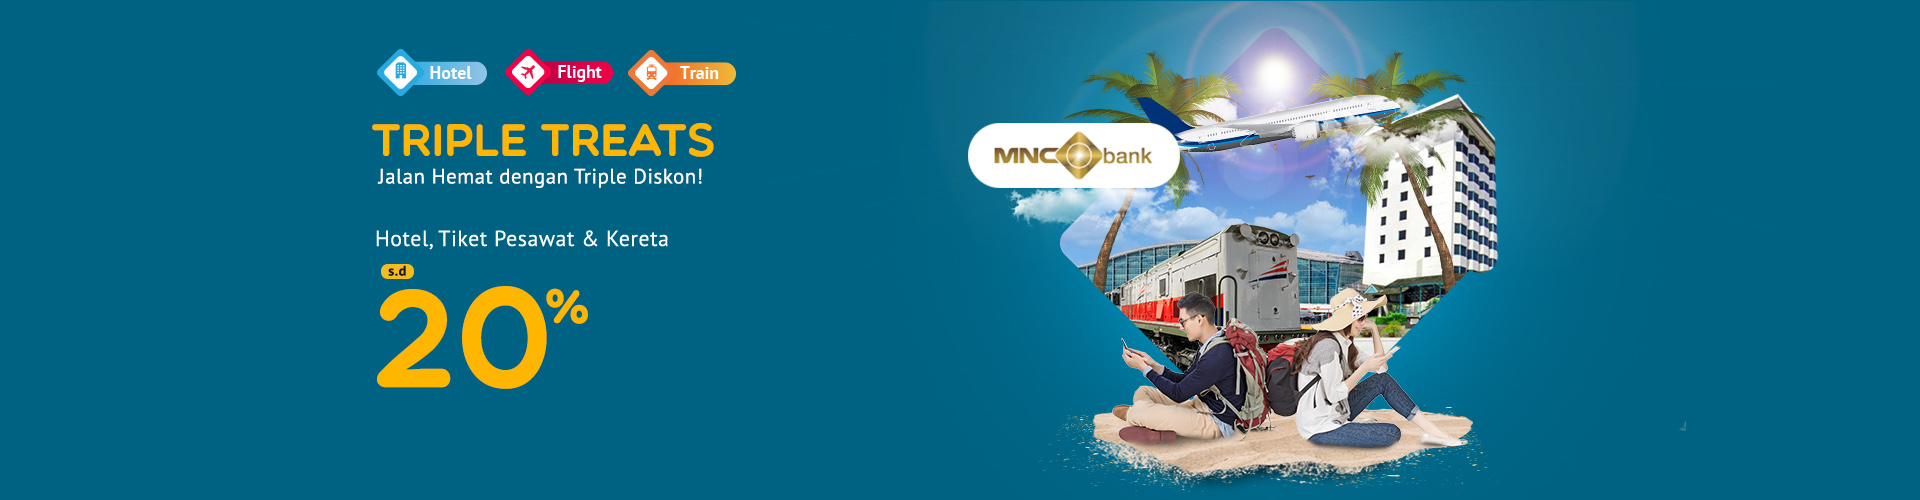 TRIPLE TREATS MNC Bank